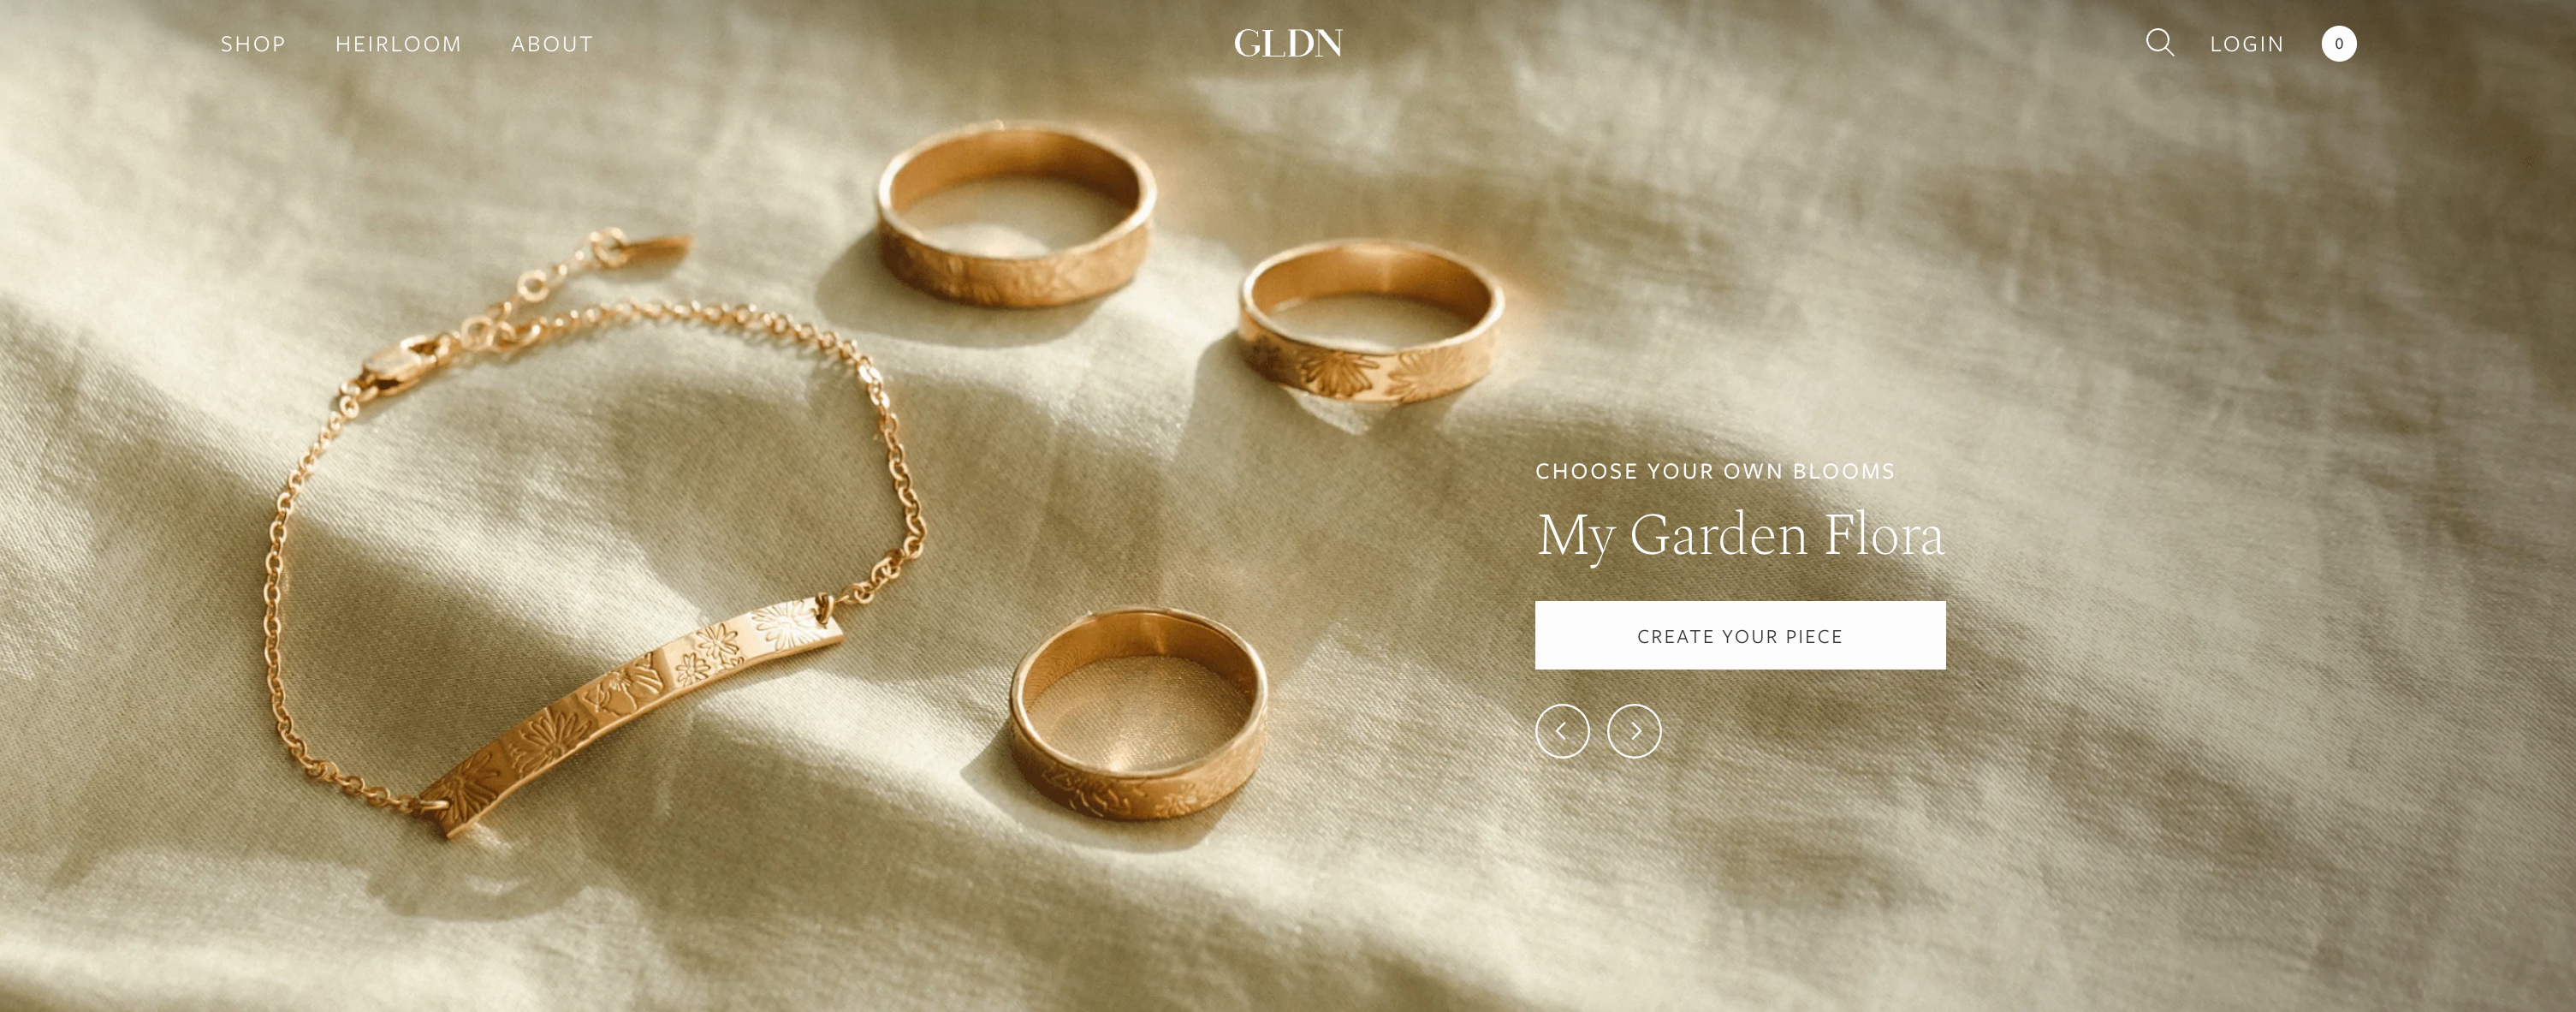 GLDN - personalized jewelry